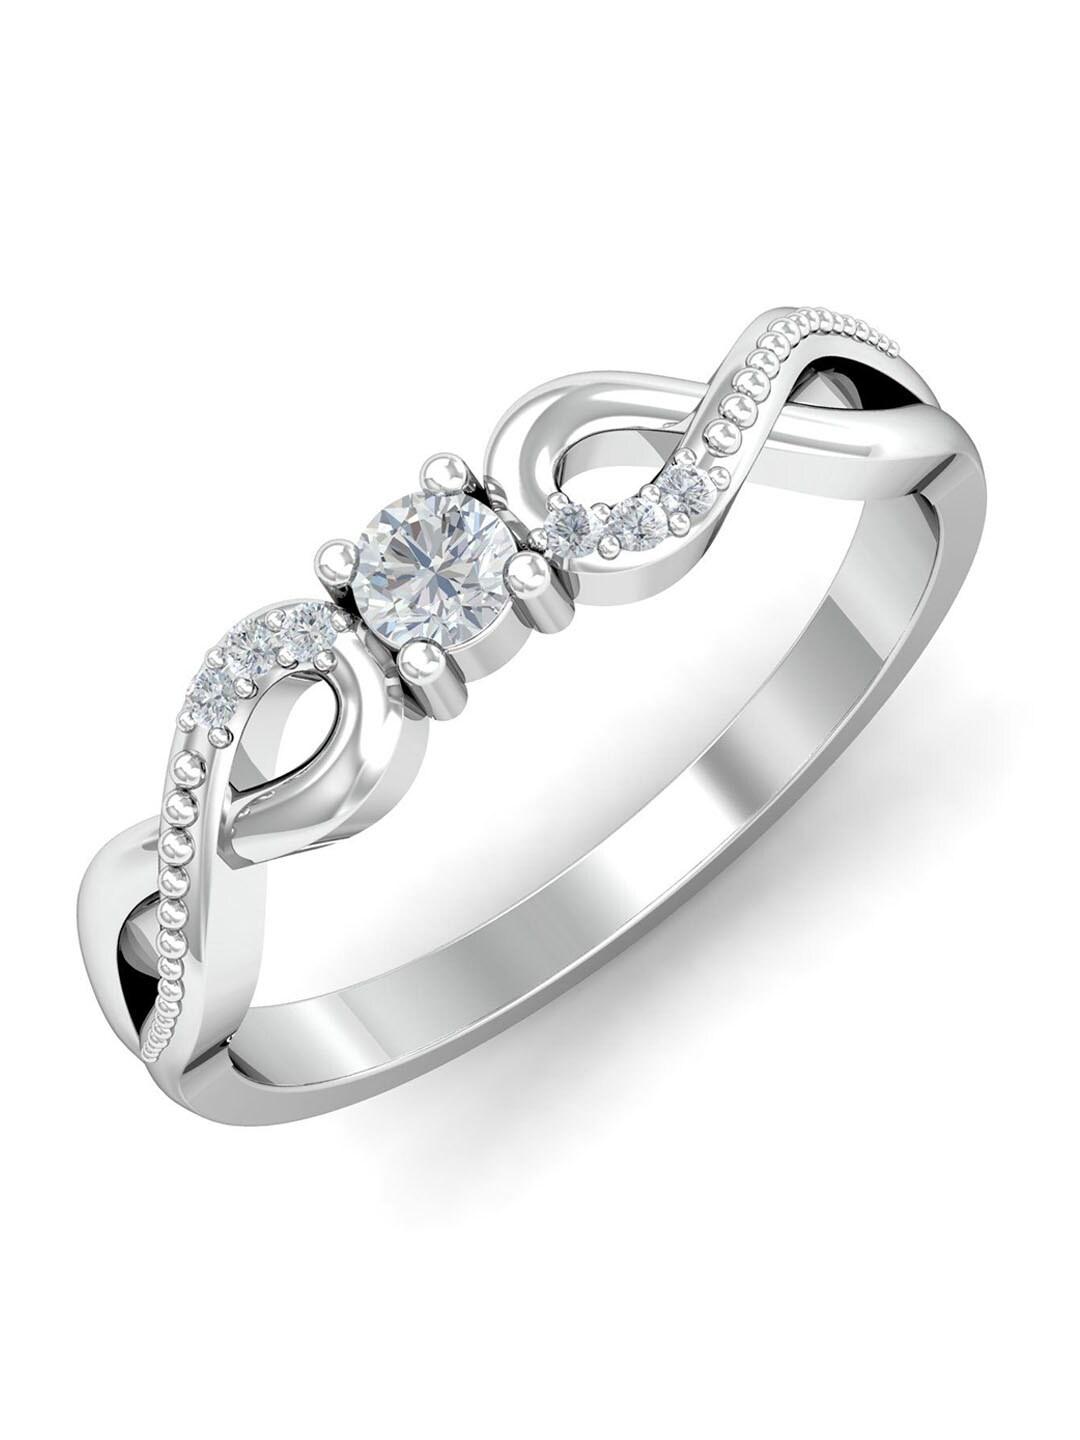 KUBERBOX Enchanting Infinity Solitaire 18KT White Gold Diamond Studded Finger Ring-3.15gm